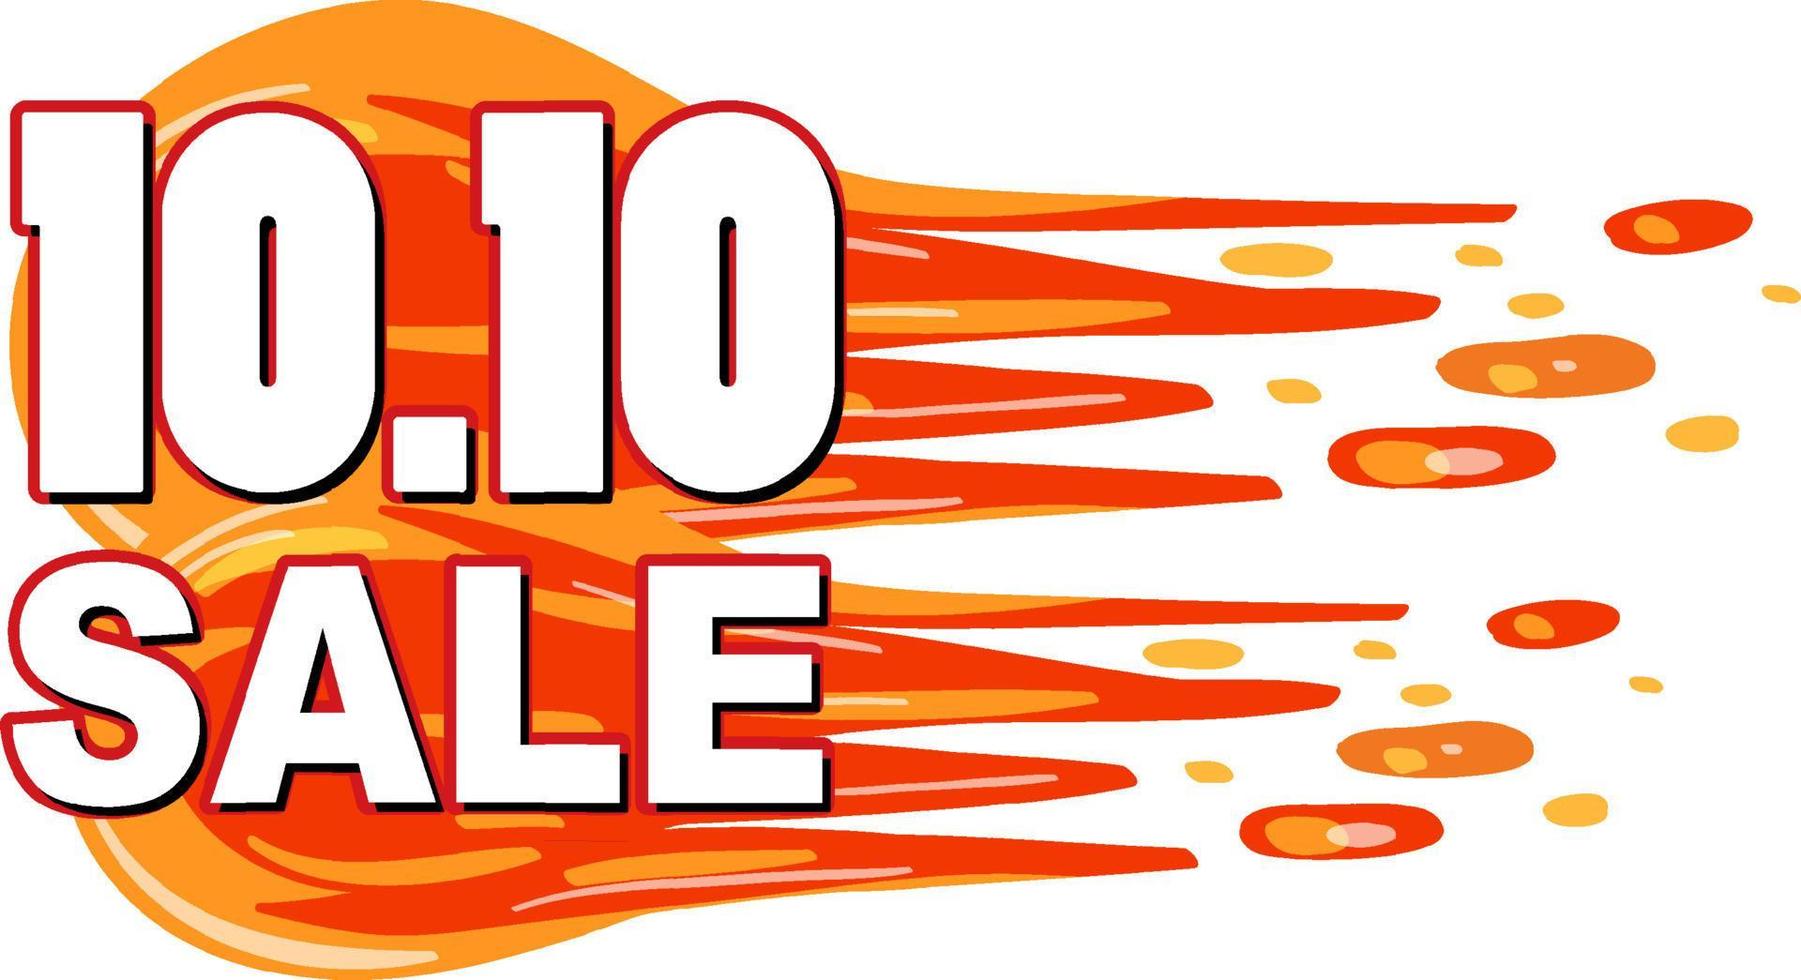 10.10 Sale promotion fire banner vector